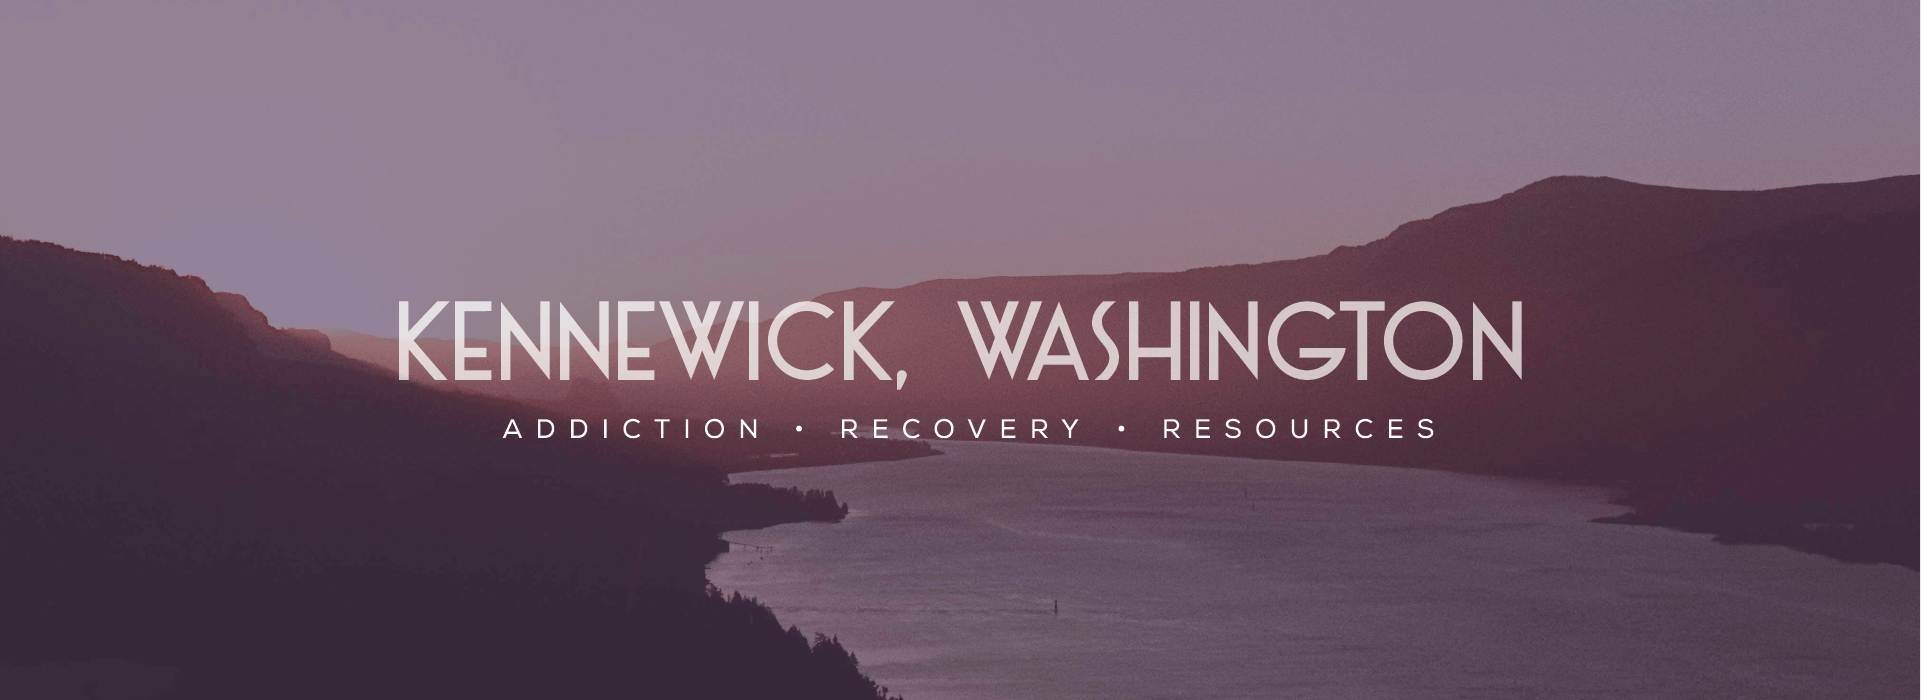 Kennewick Washington Addiction Resources